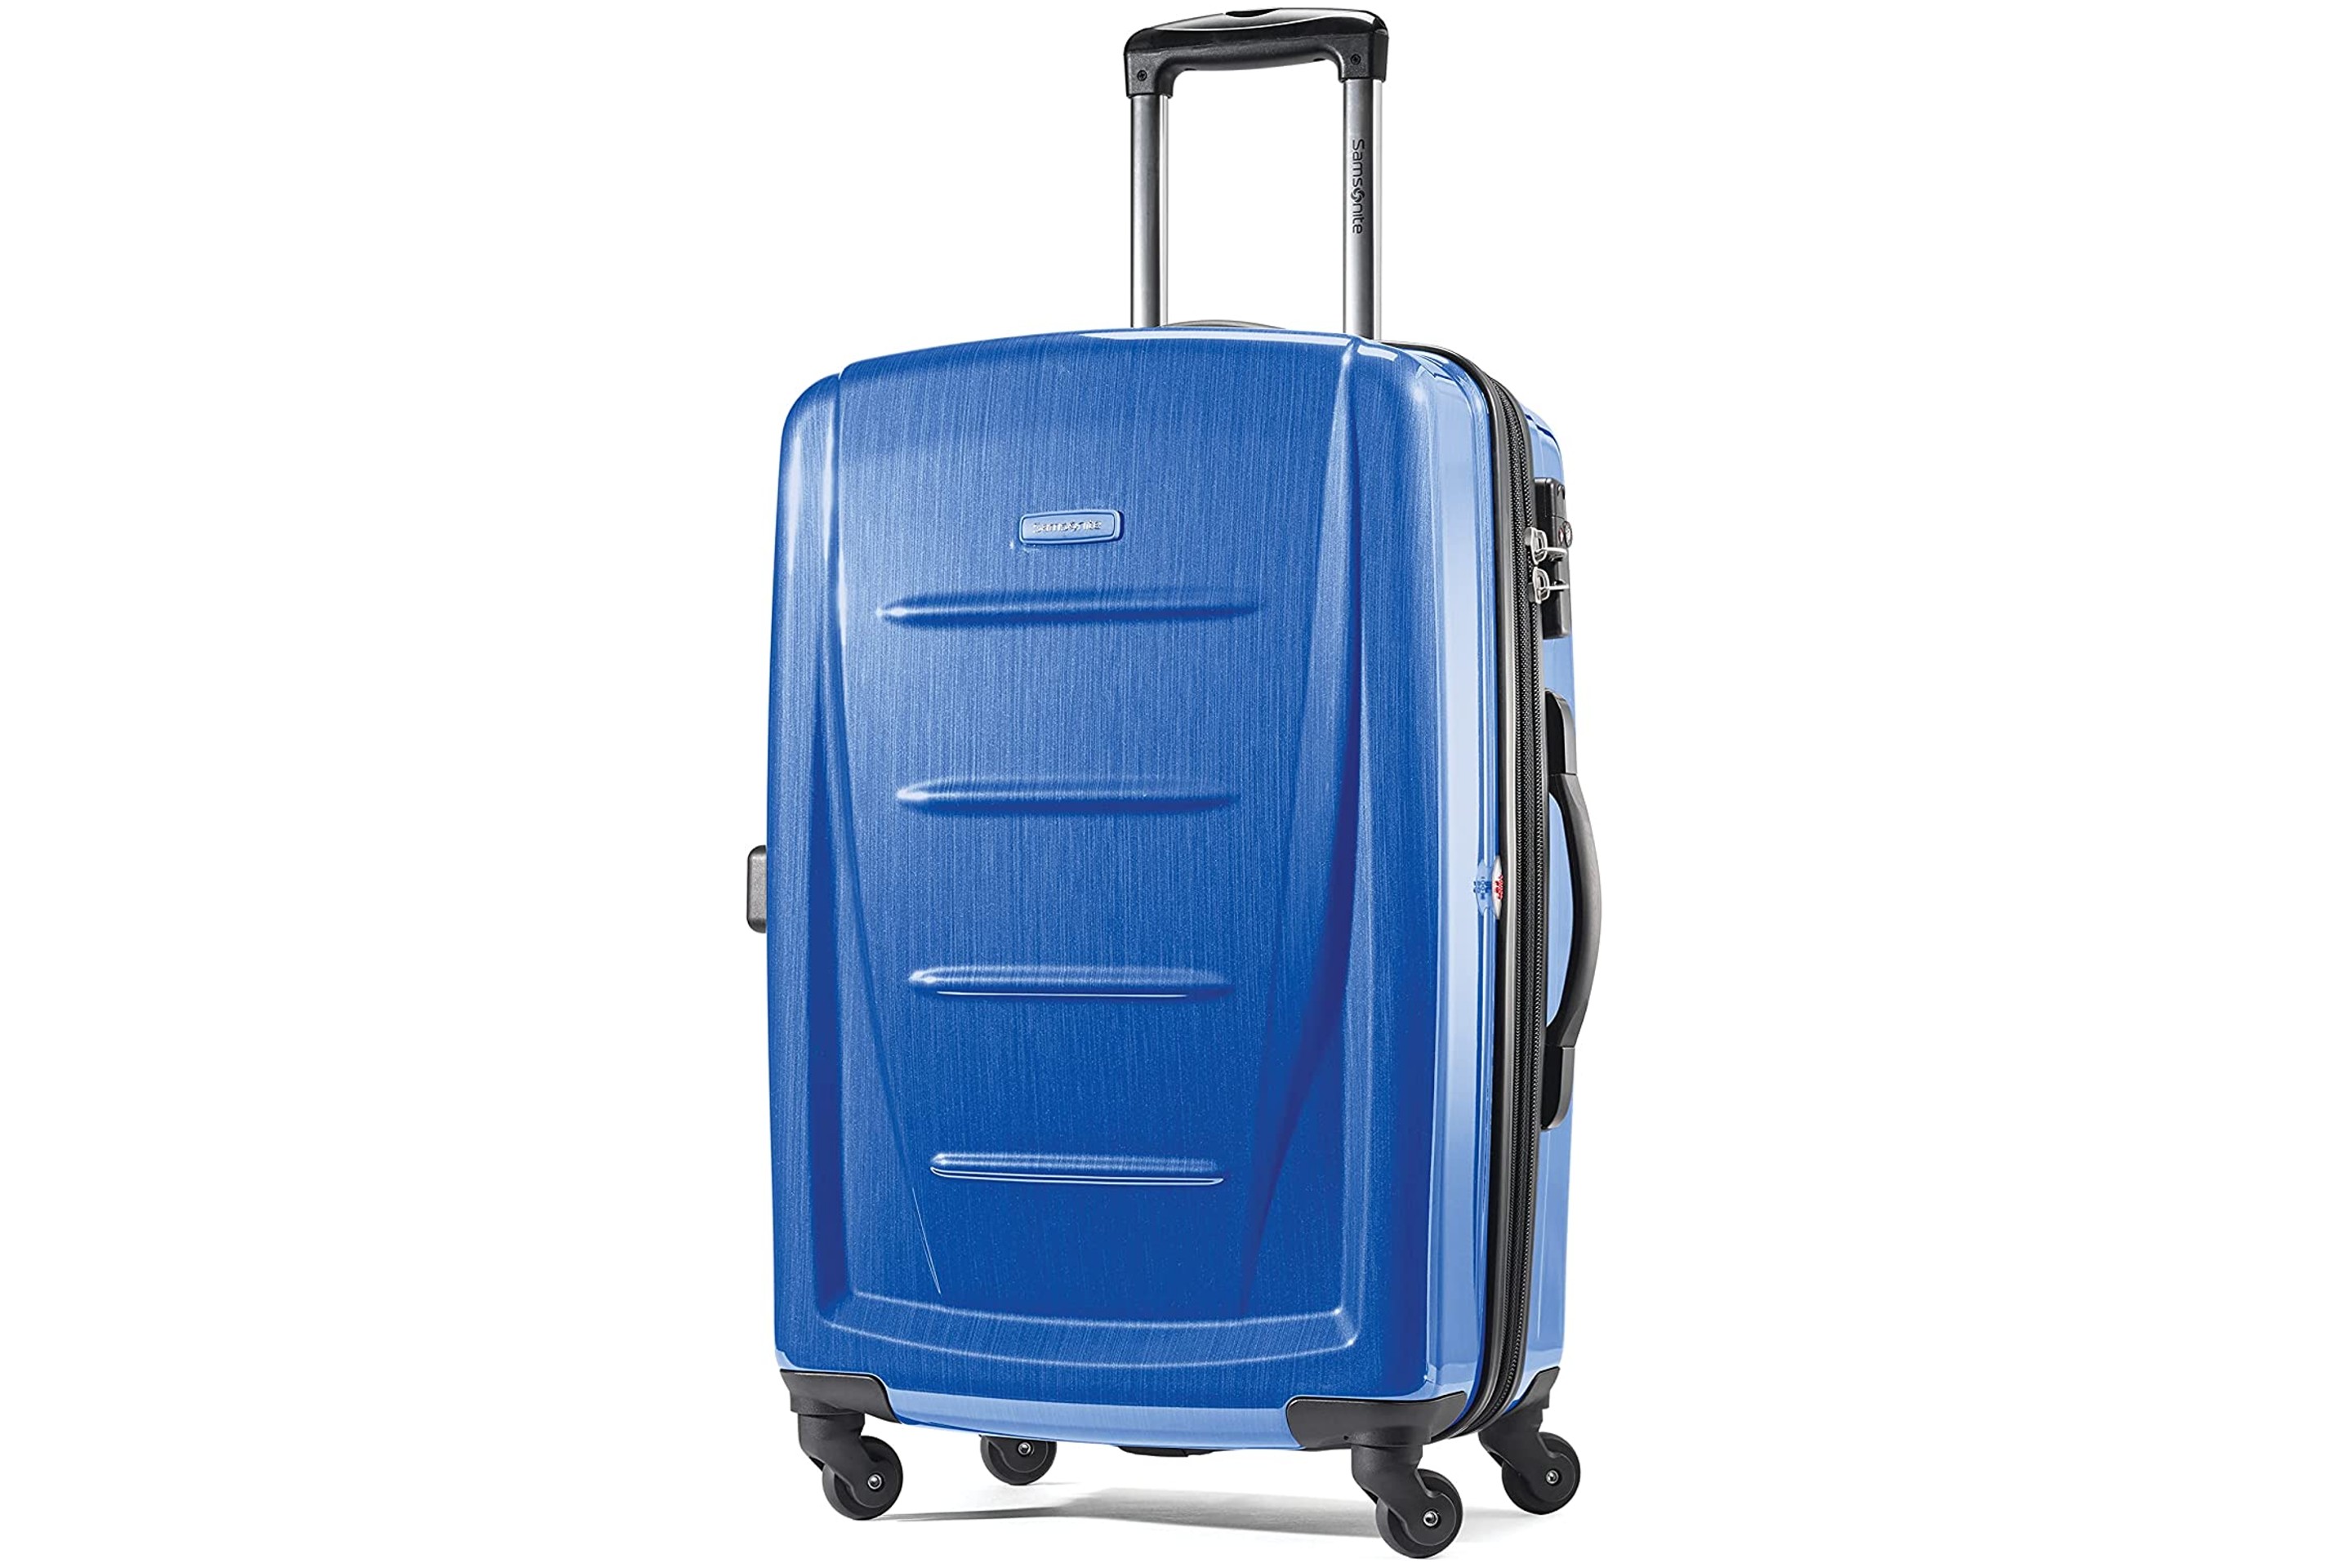 Samsonite Winfield Hardside Expandable Luggage